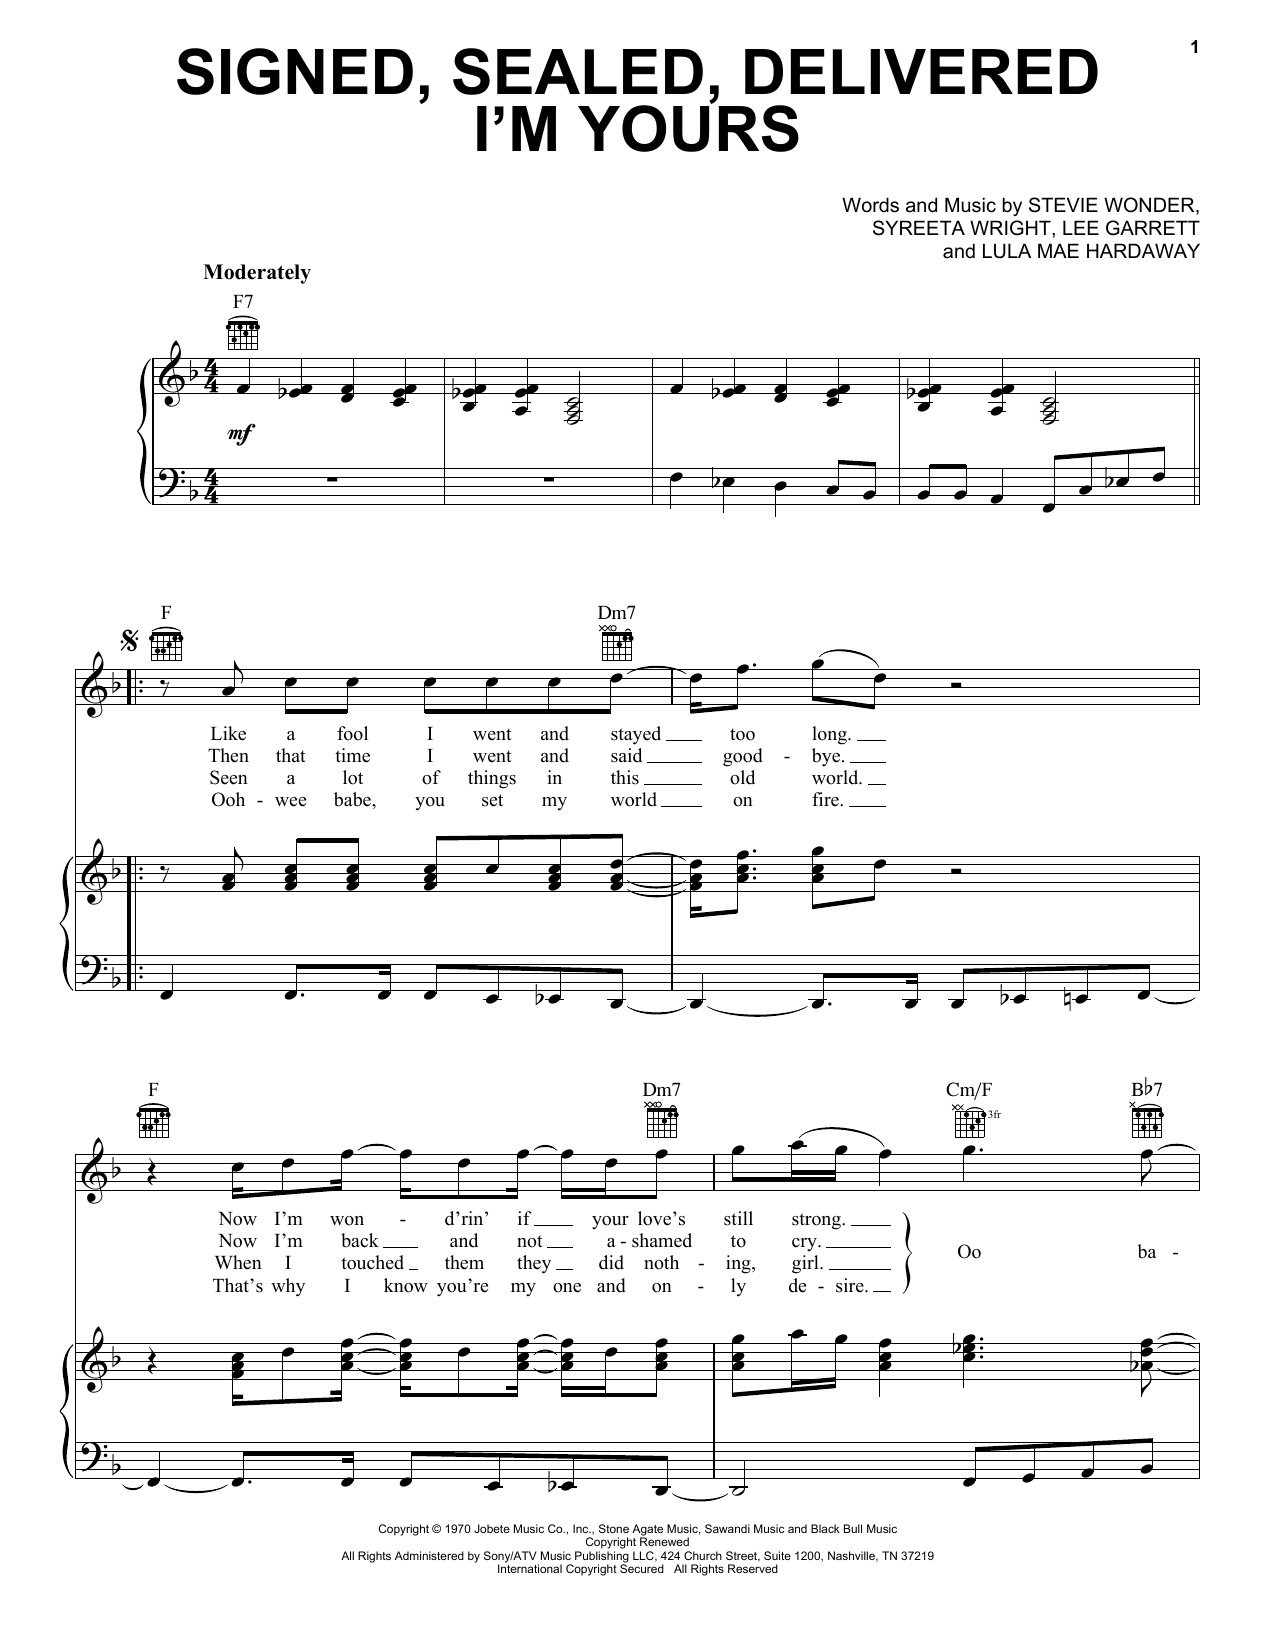 Stevie Wonder Signed, Sealed, Delivered I'm Yours sheet music notes and chords. Download Printable PDF.